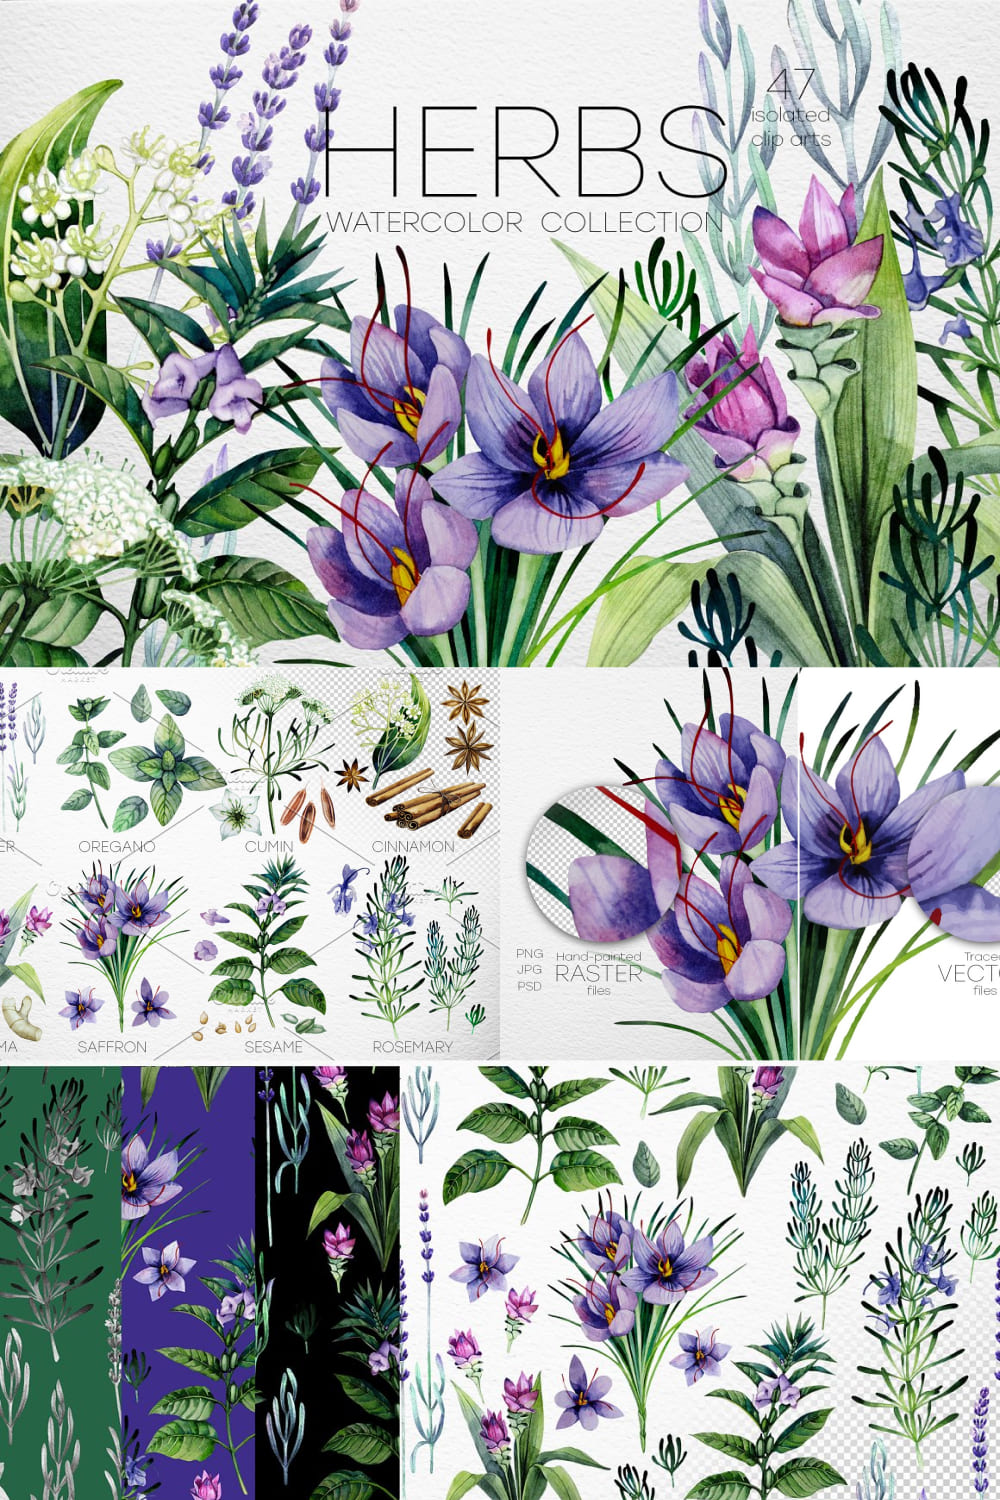 Watercolor Herbs pinterest image.